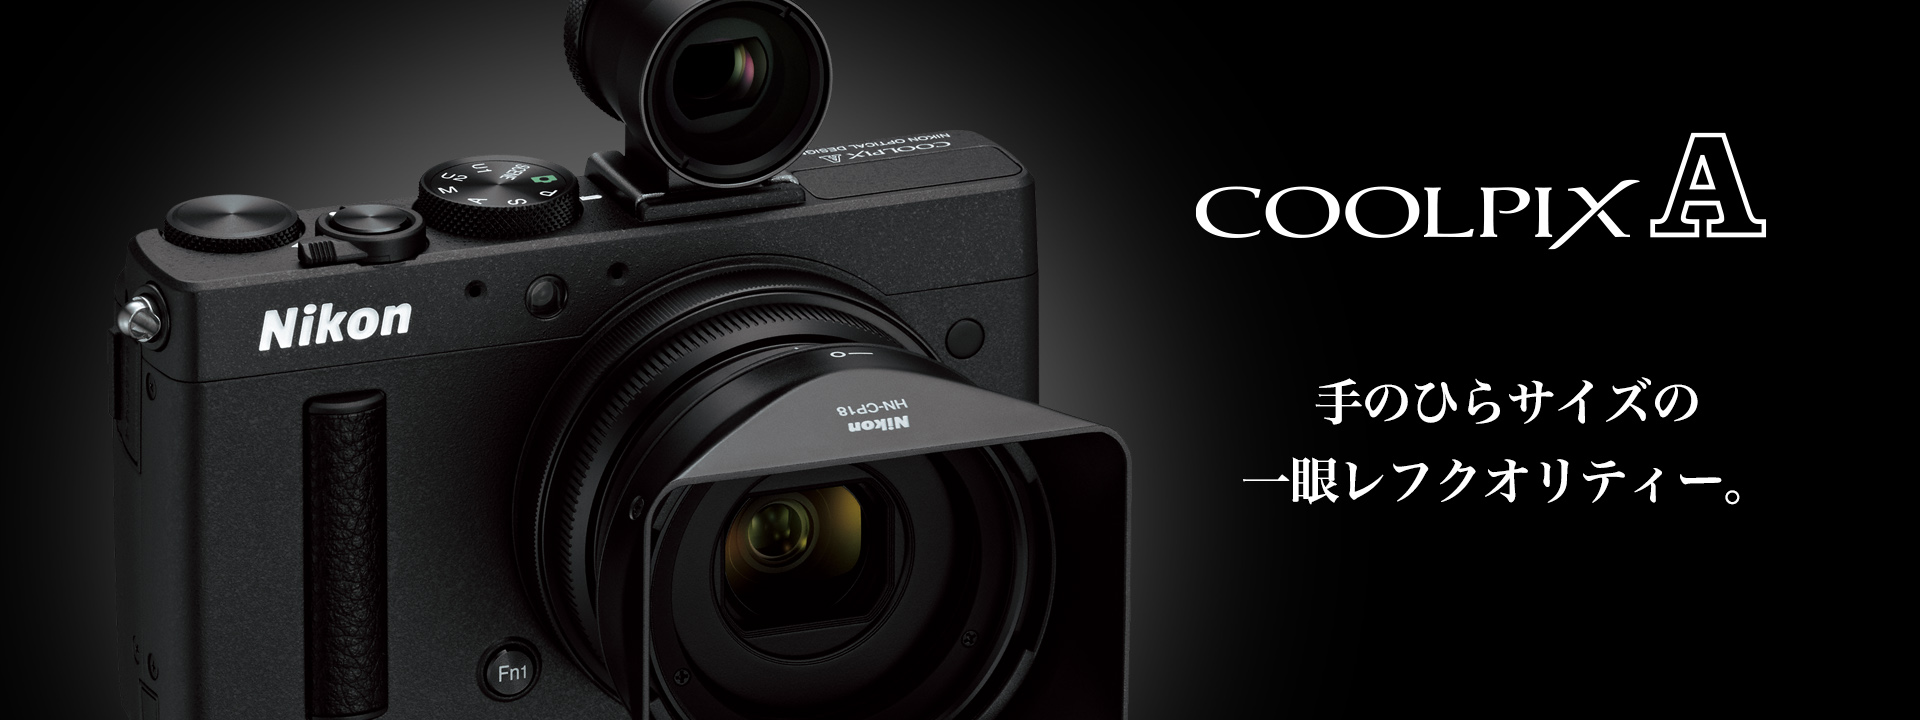 Nikon コンパクトデジタルカメラ COOLPIX Performance P